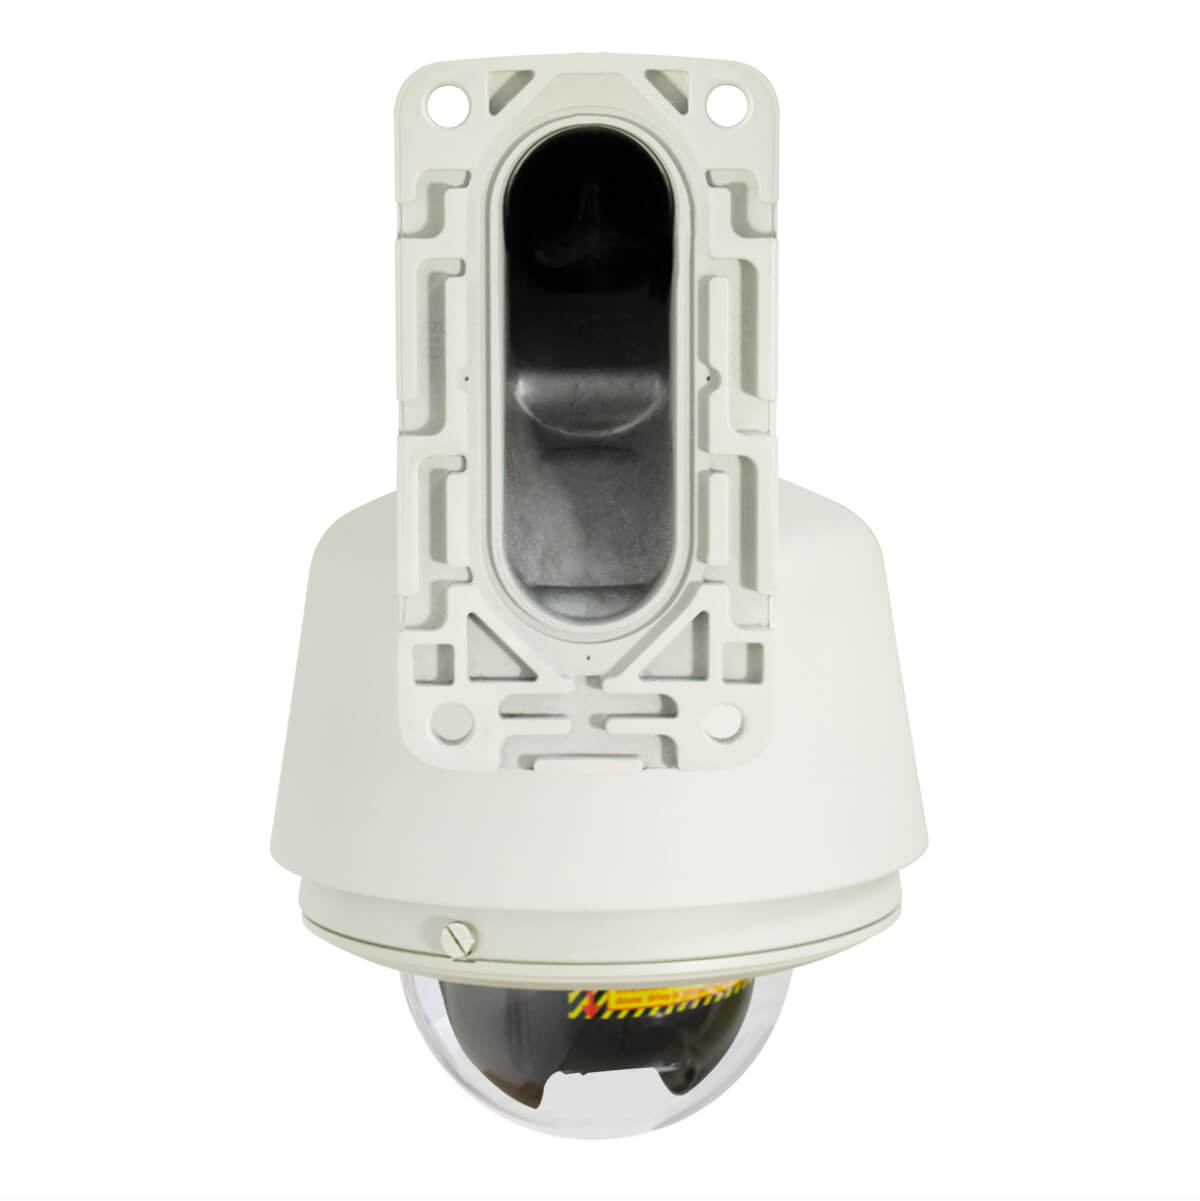 Camara para exteriores tipo domo PTZ alta velocidad, CCD SONY 480TV, ZOOM de 18x